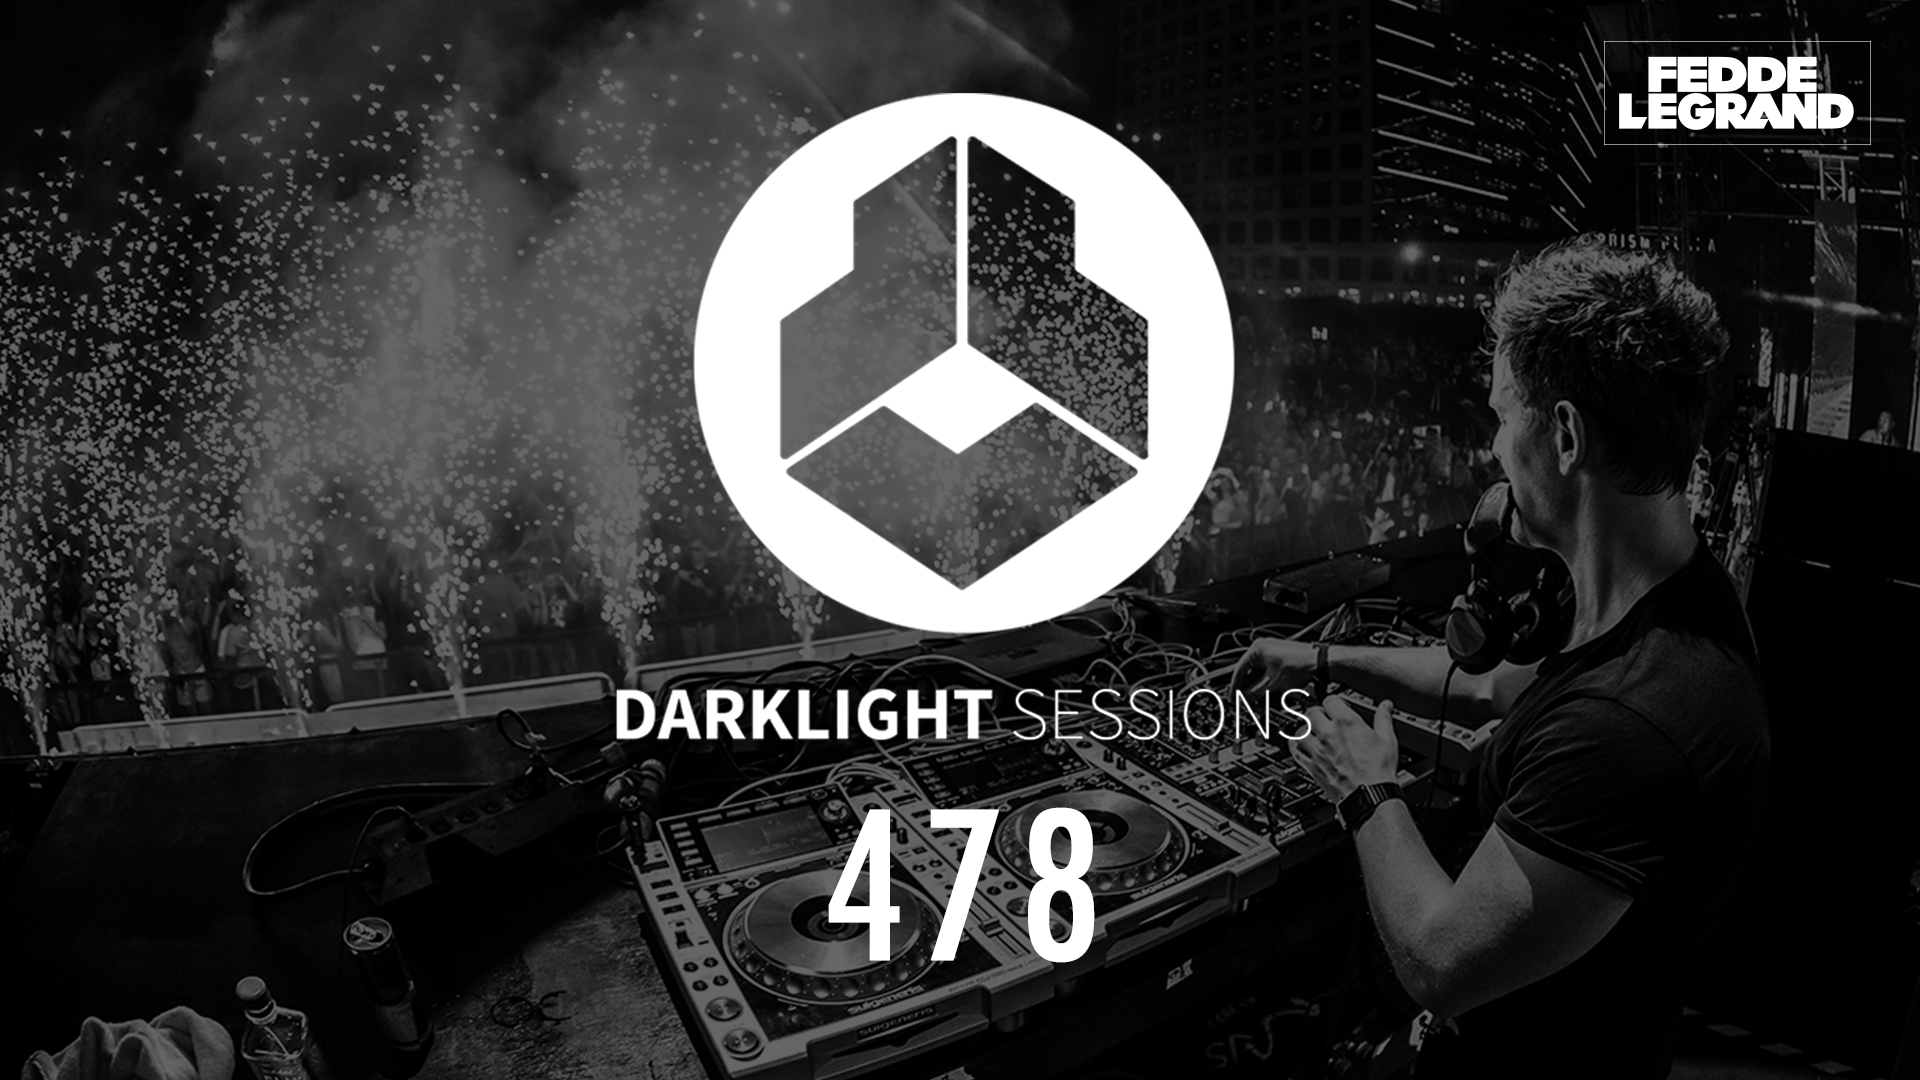 Darklight Sessions 478